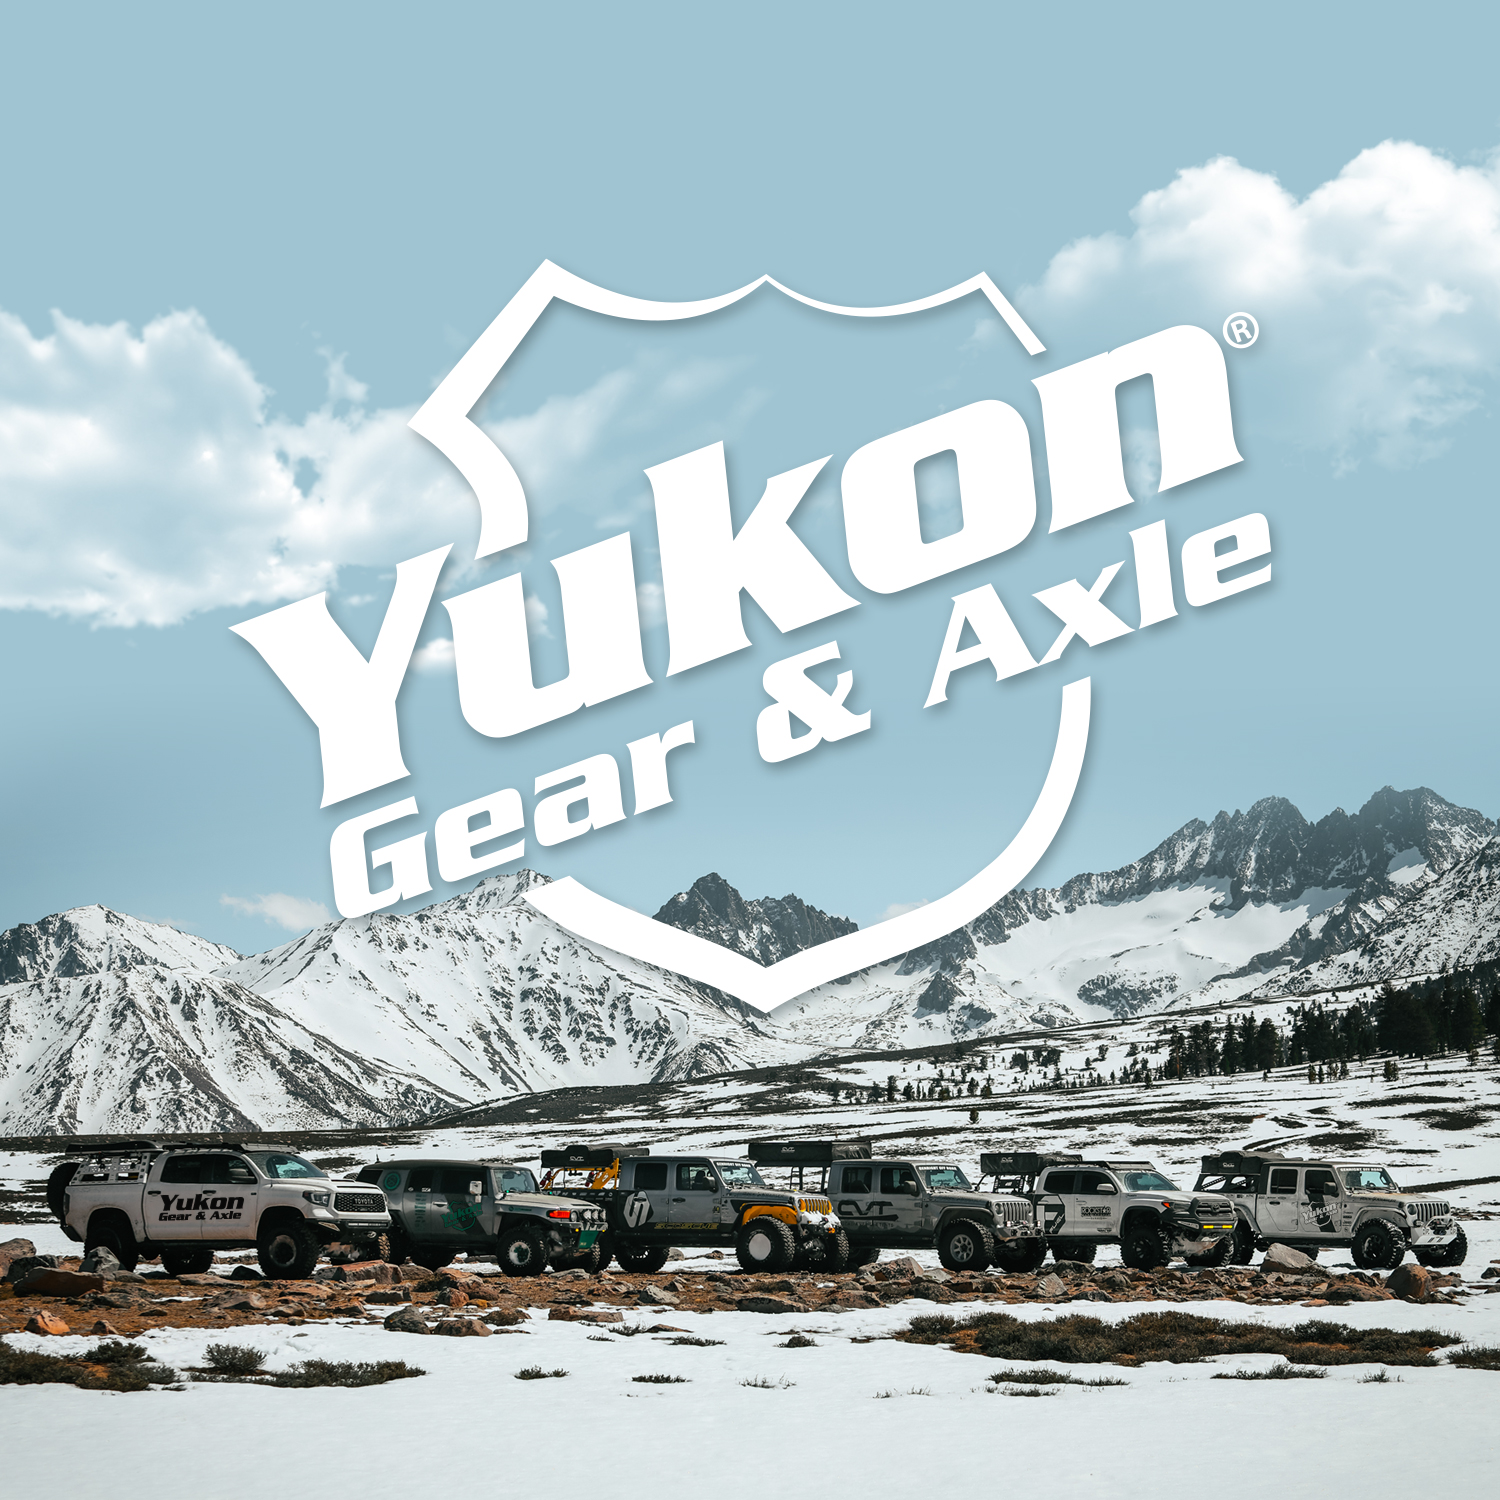 Yukon high performance replacement ring & pinion gear set, Dana 60, 4.11 ratio 